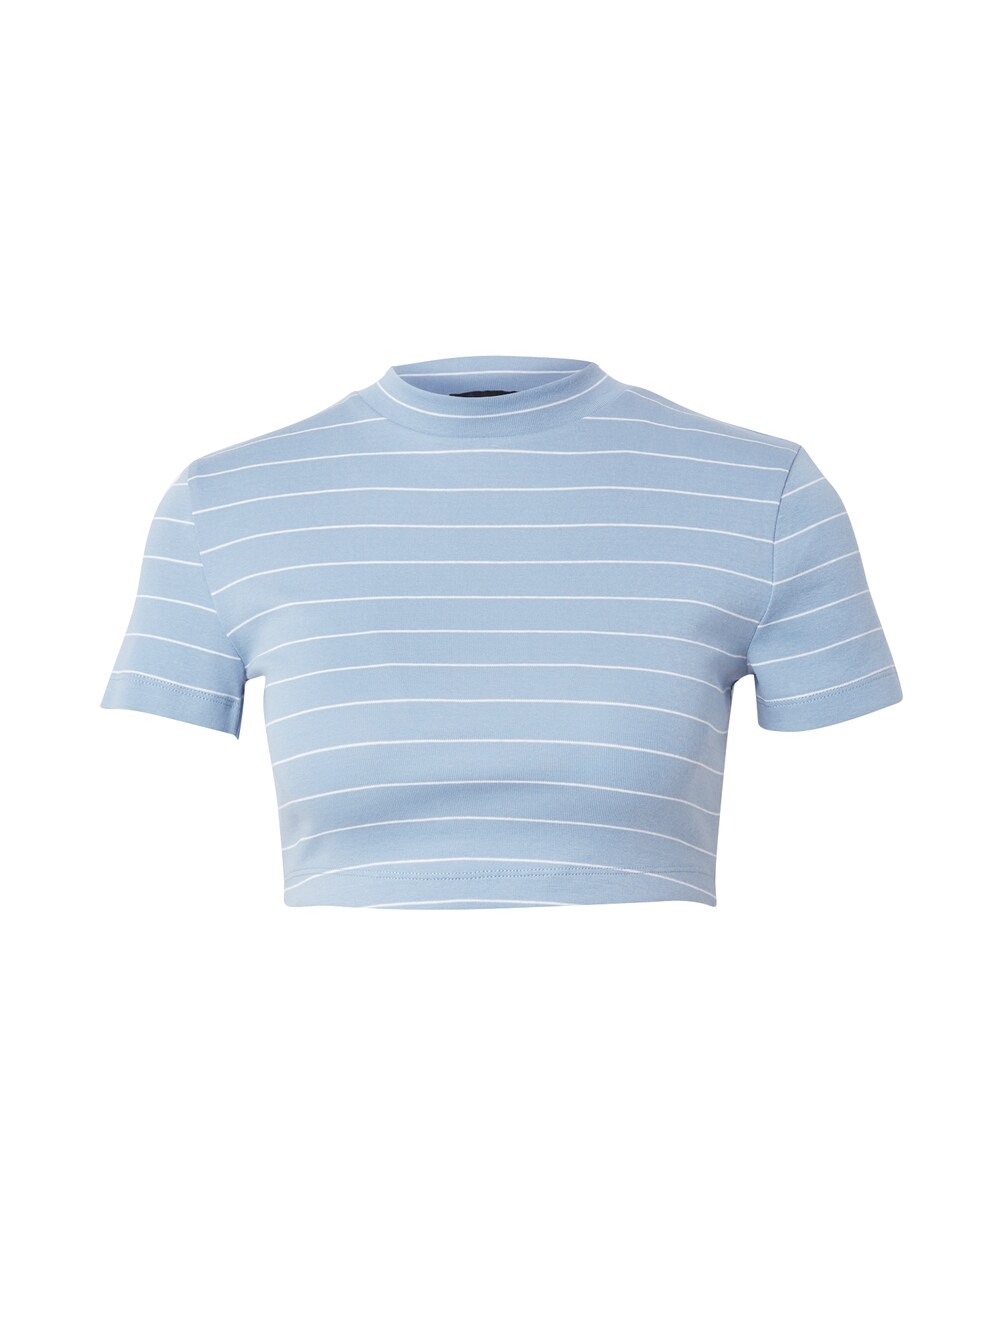 Рубашка Tally Weijl, светло-синий топ tally weijl с пайетками 40 размер